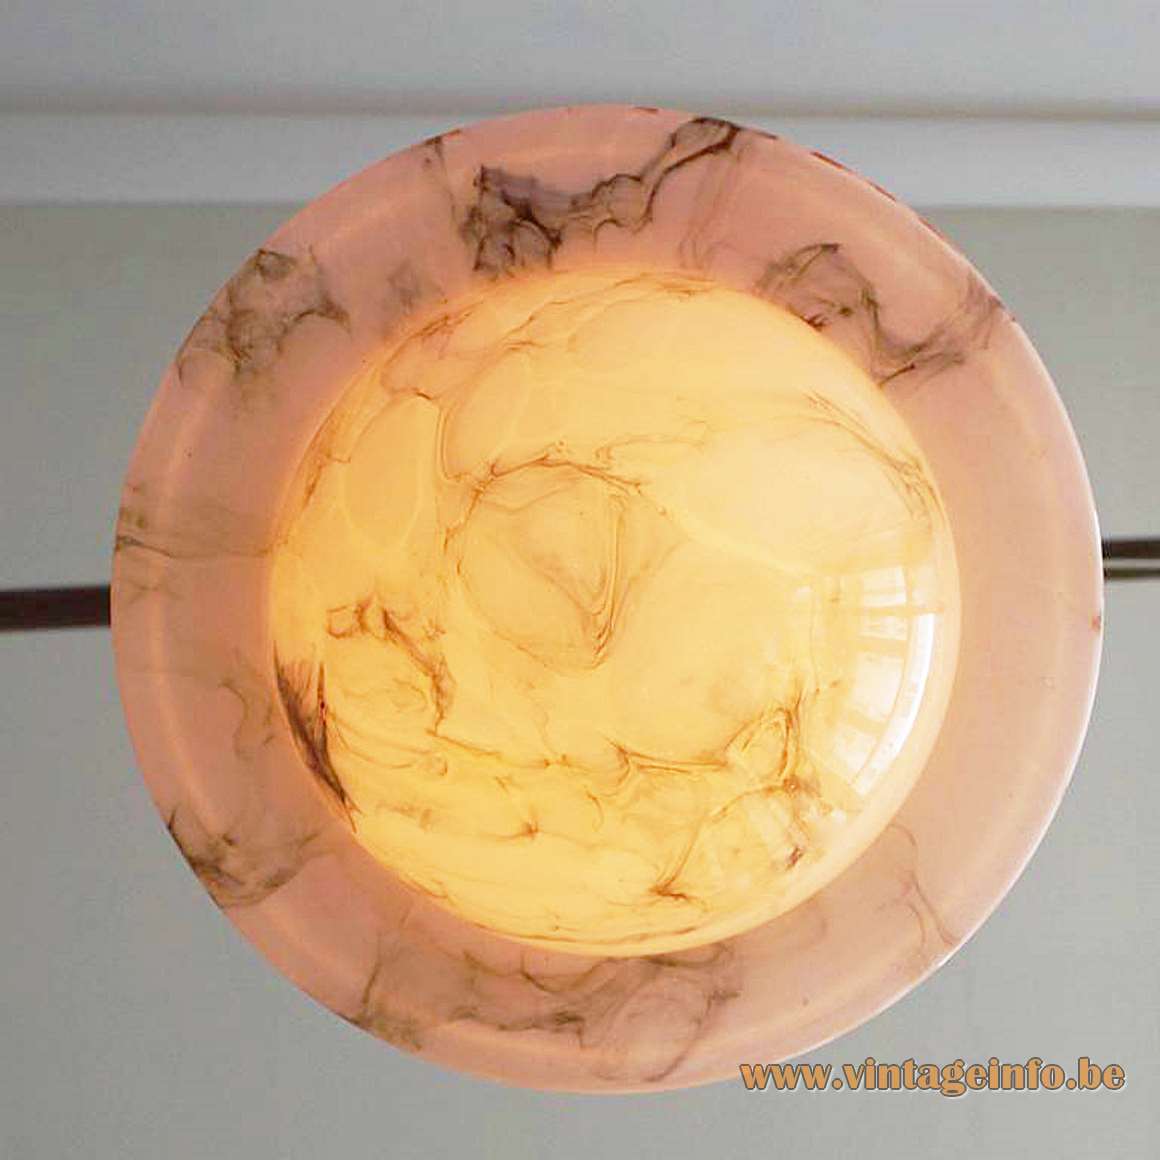 Marbled glass art deco Saturn pendant lamp veined globe chrome rod 1920s 1930s Bauhaus E27 socket 